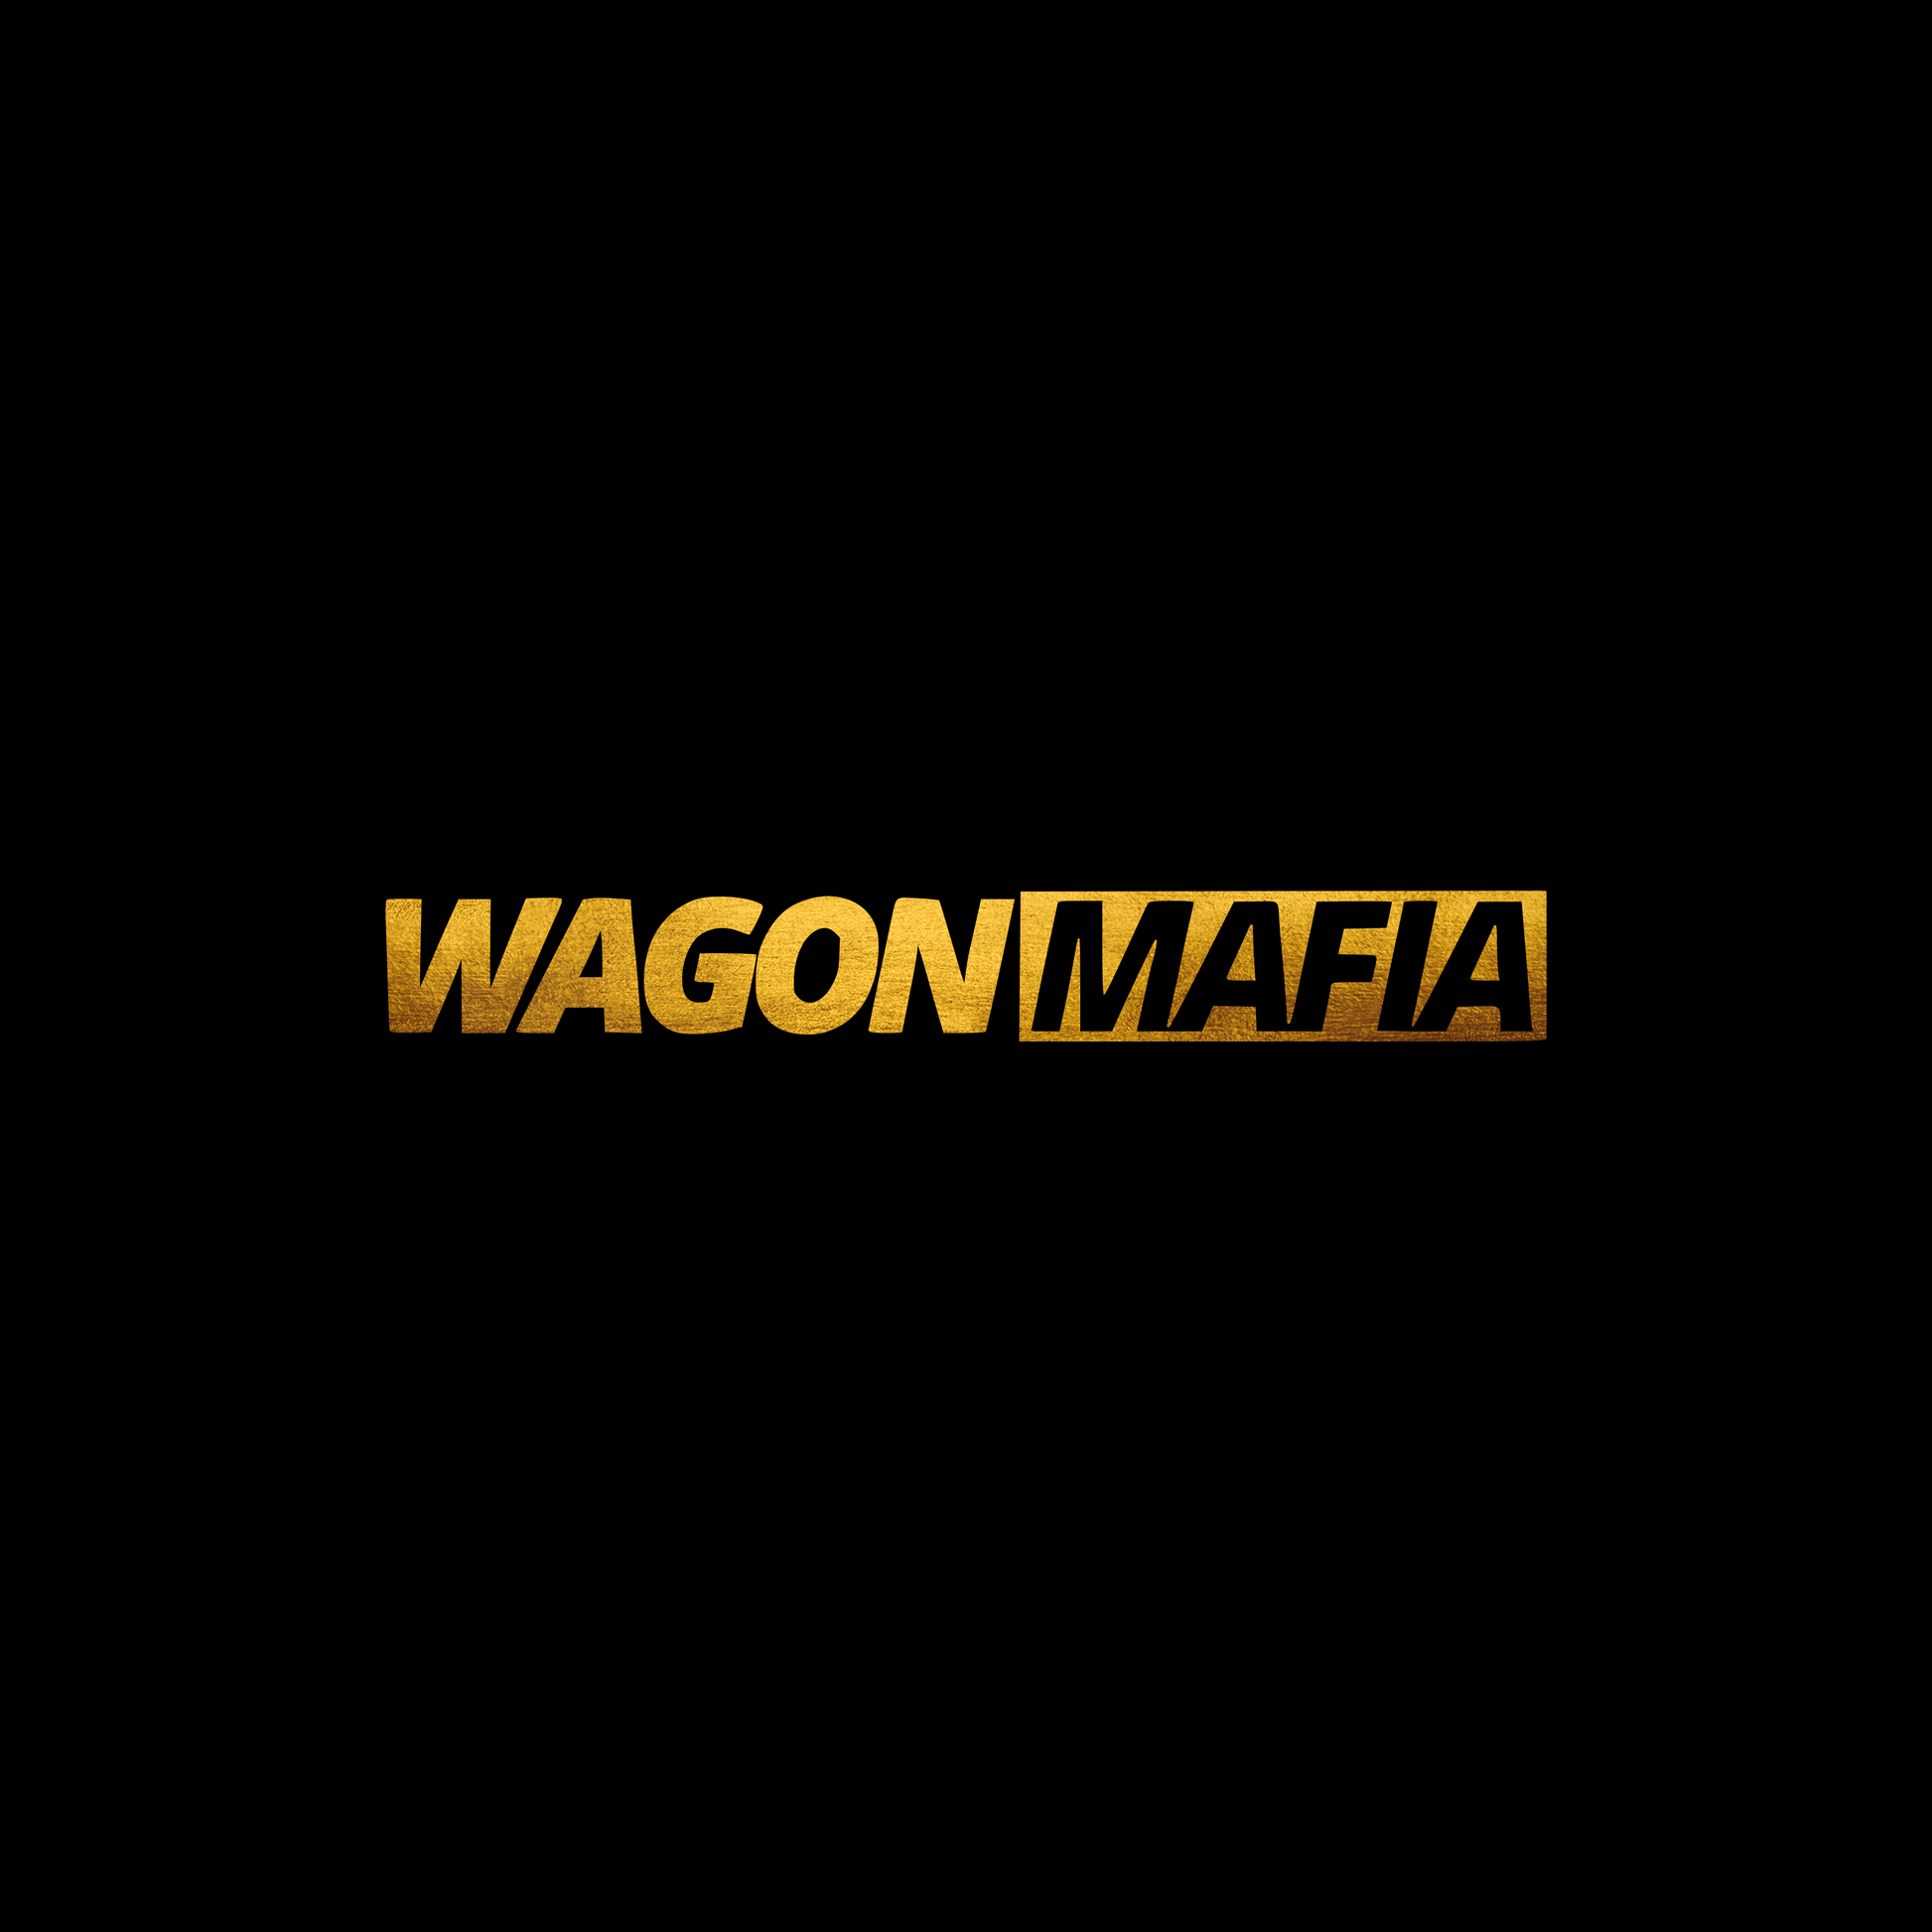 Wagon mafia sticker decal